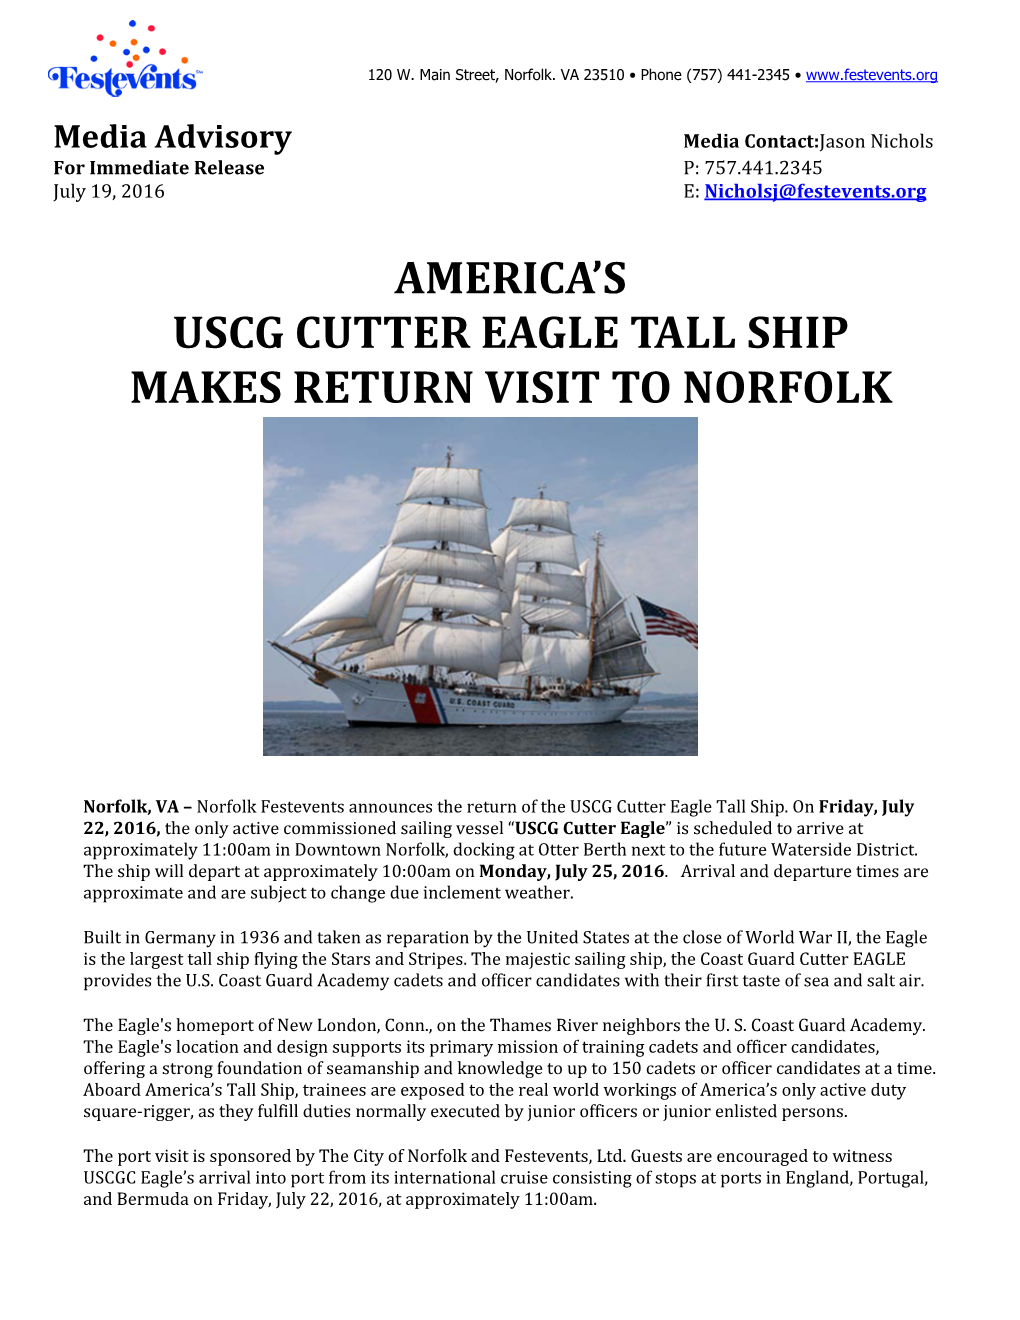 Norfolk Festevents Announces the Return of the USCG Cutter Eagle Tall Ship